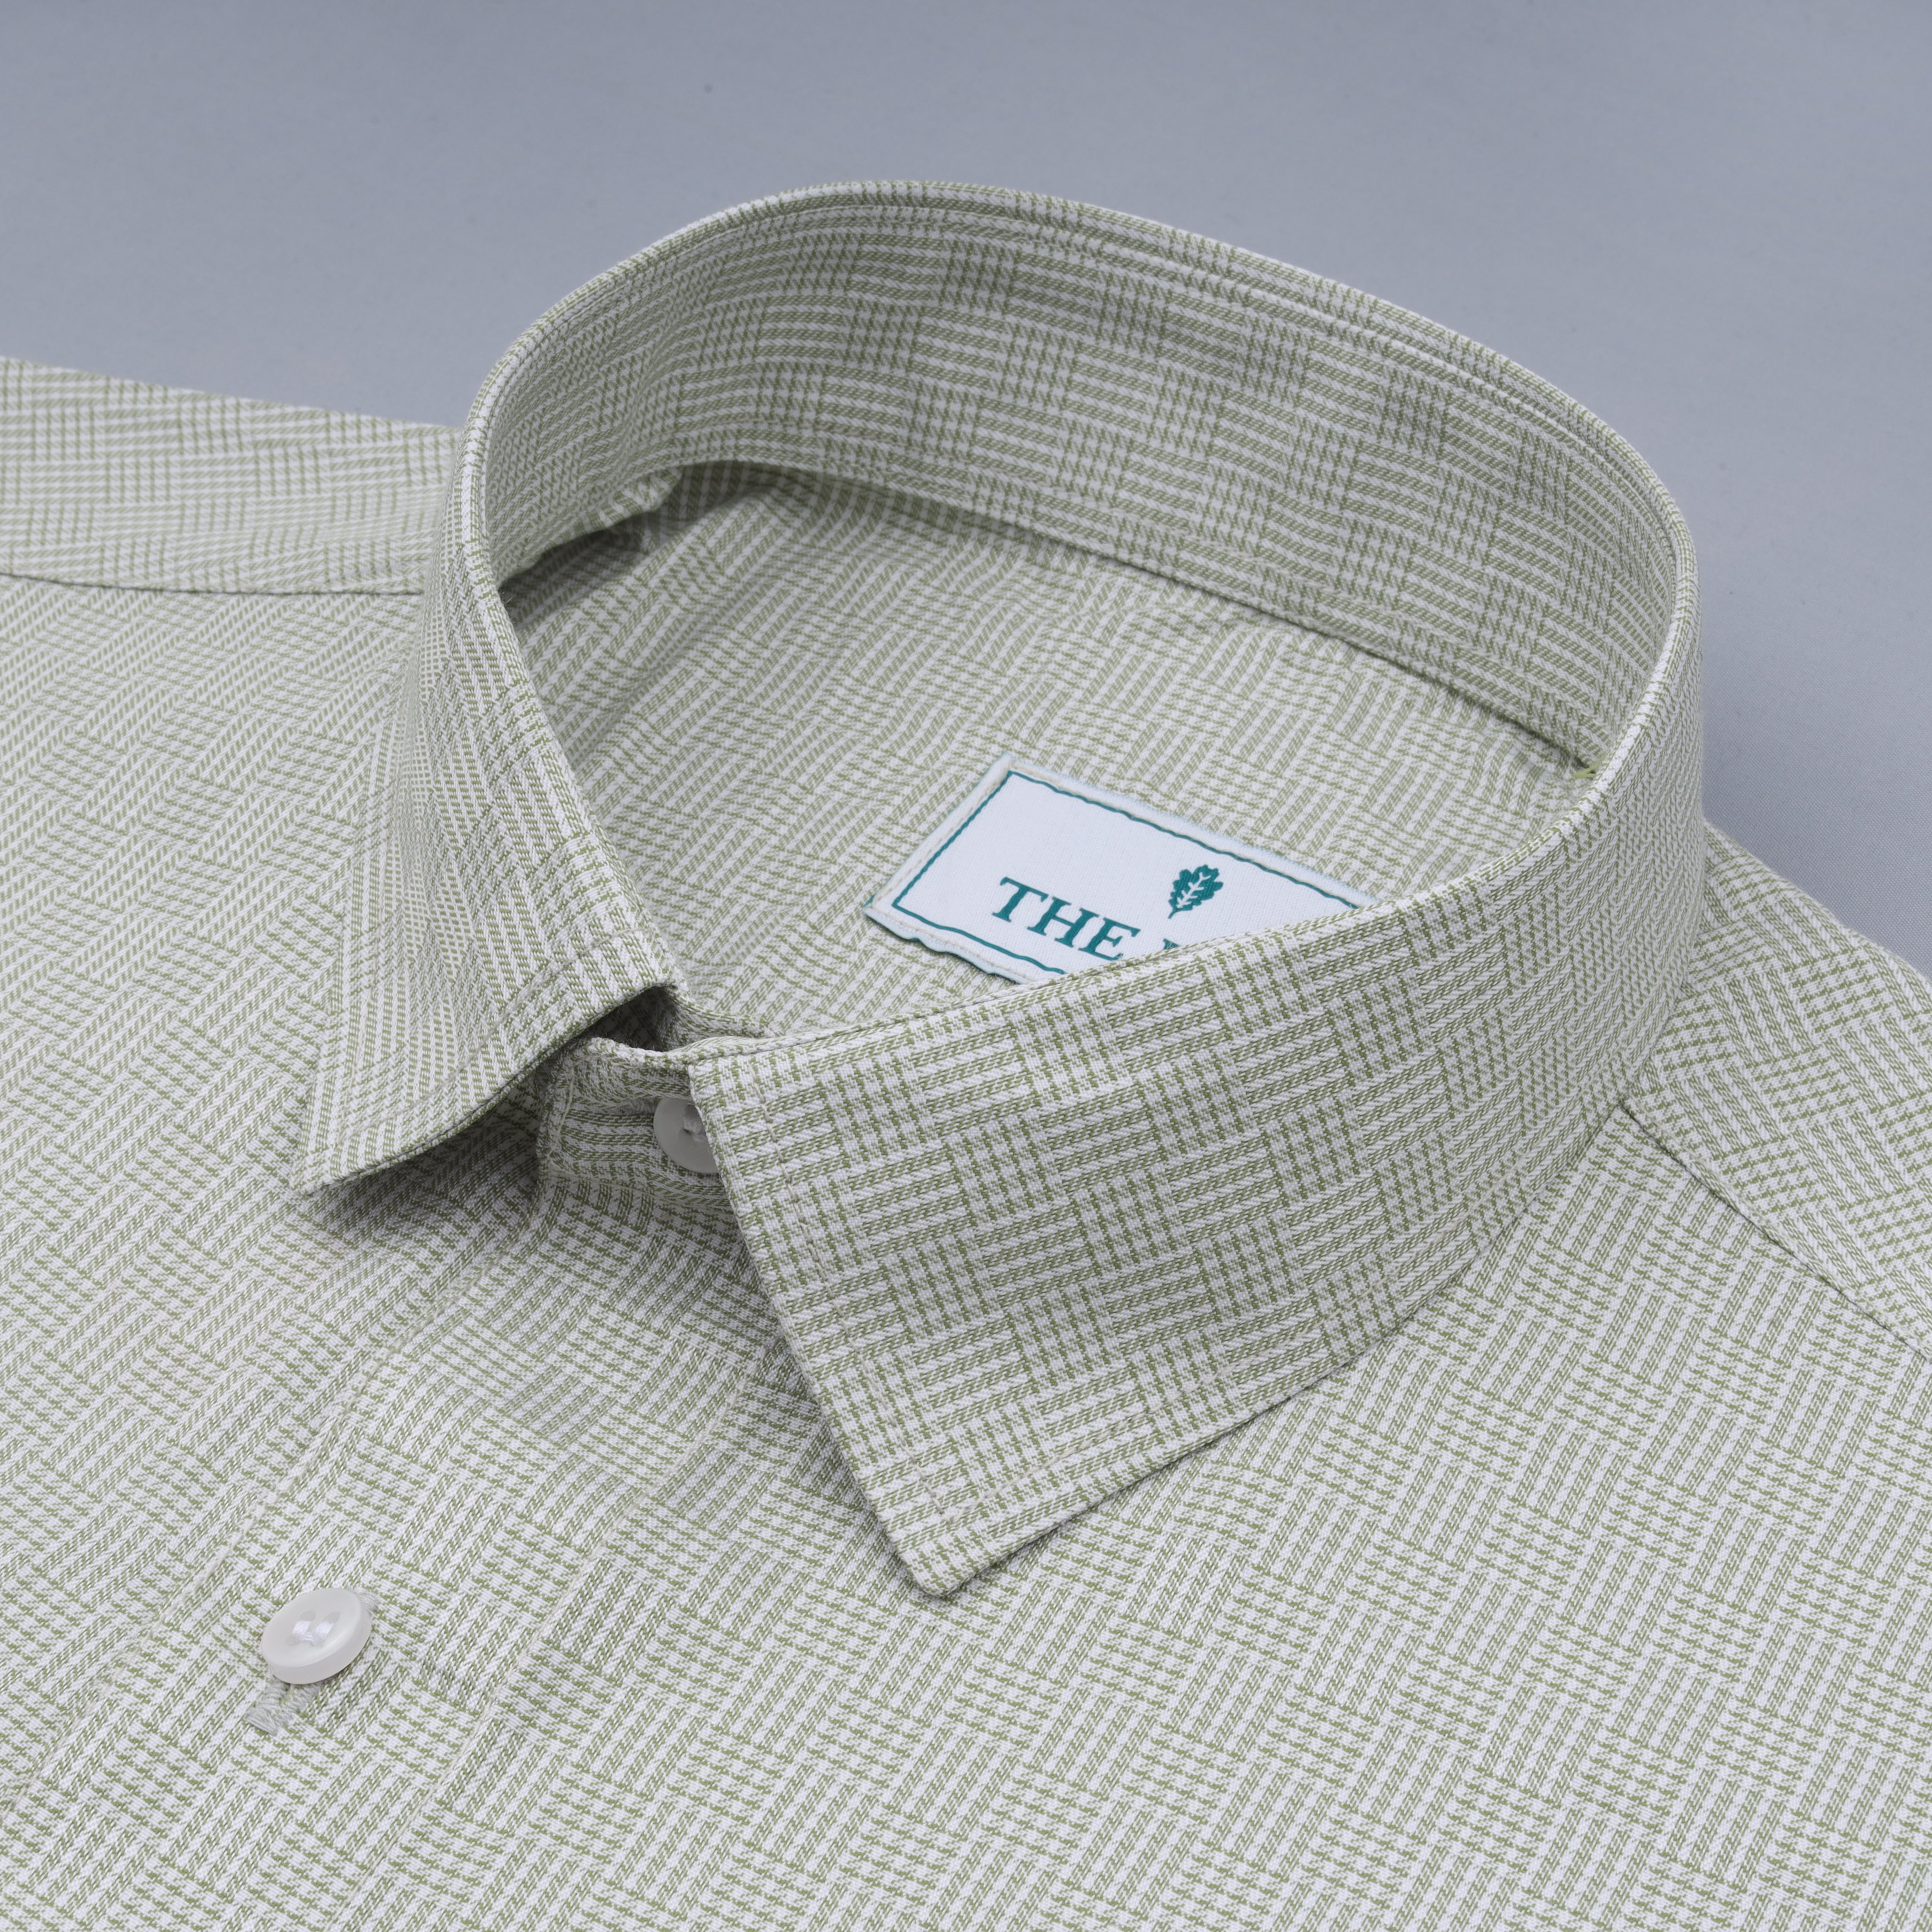 Green Checks Premium Cotton Shirt